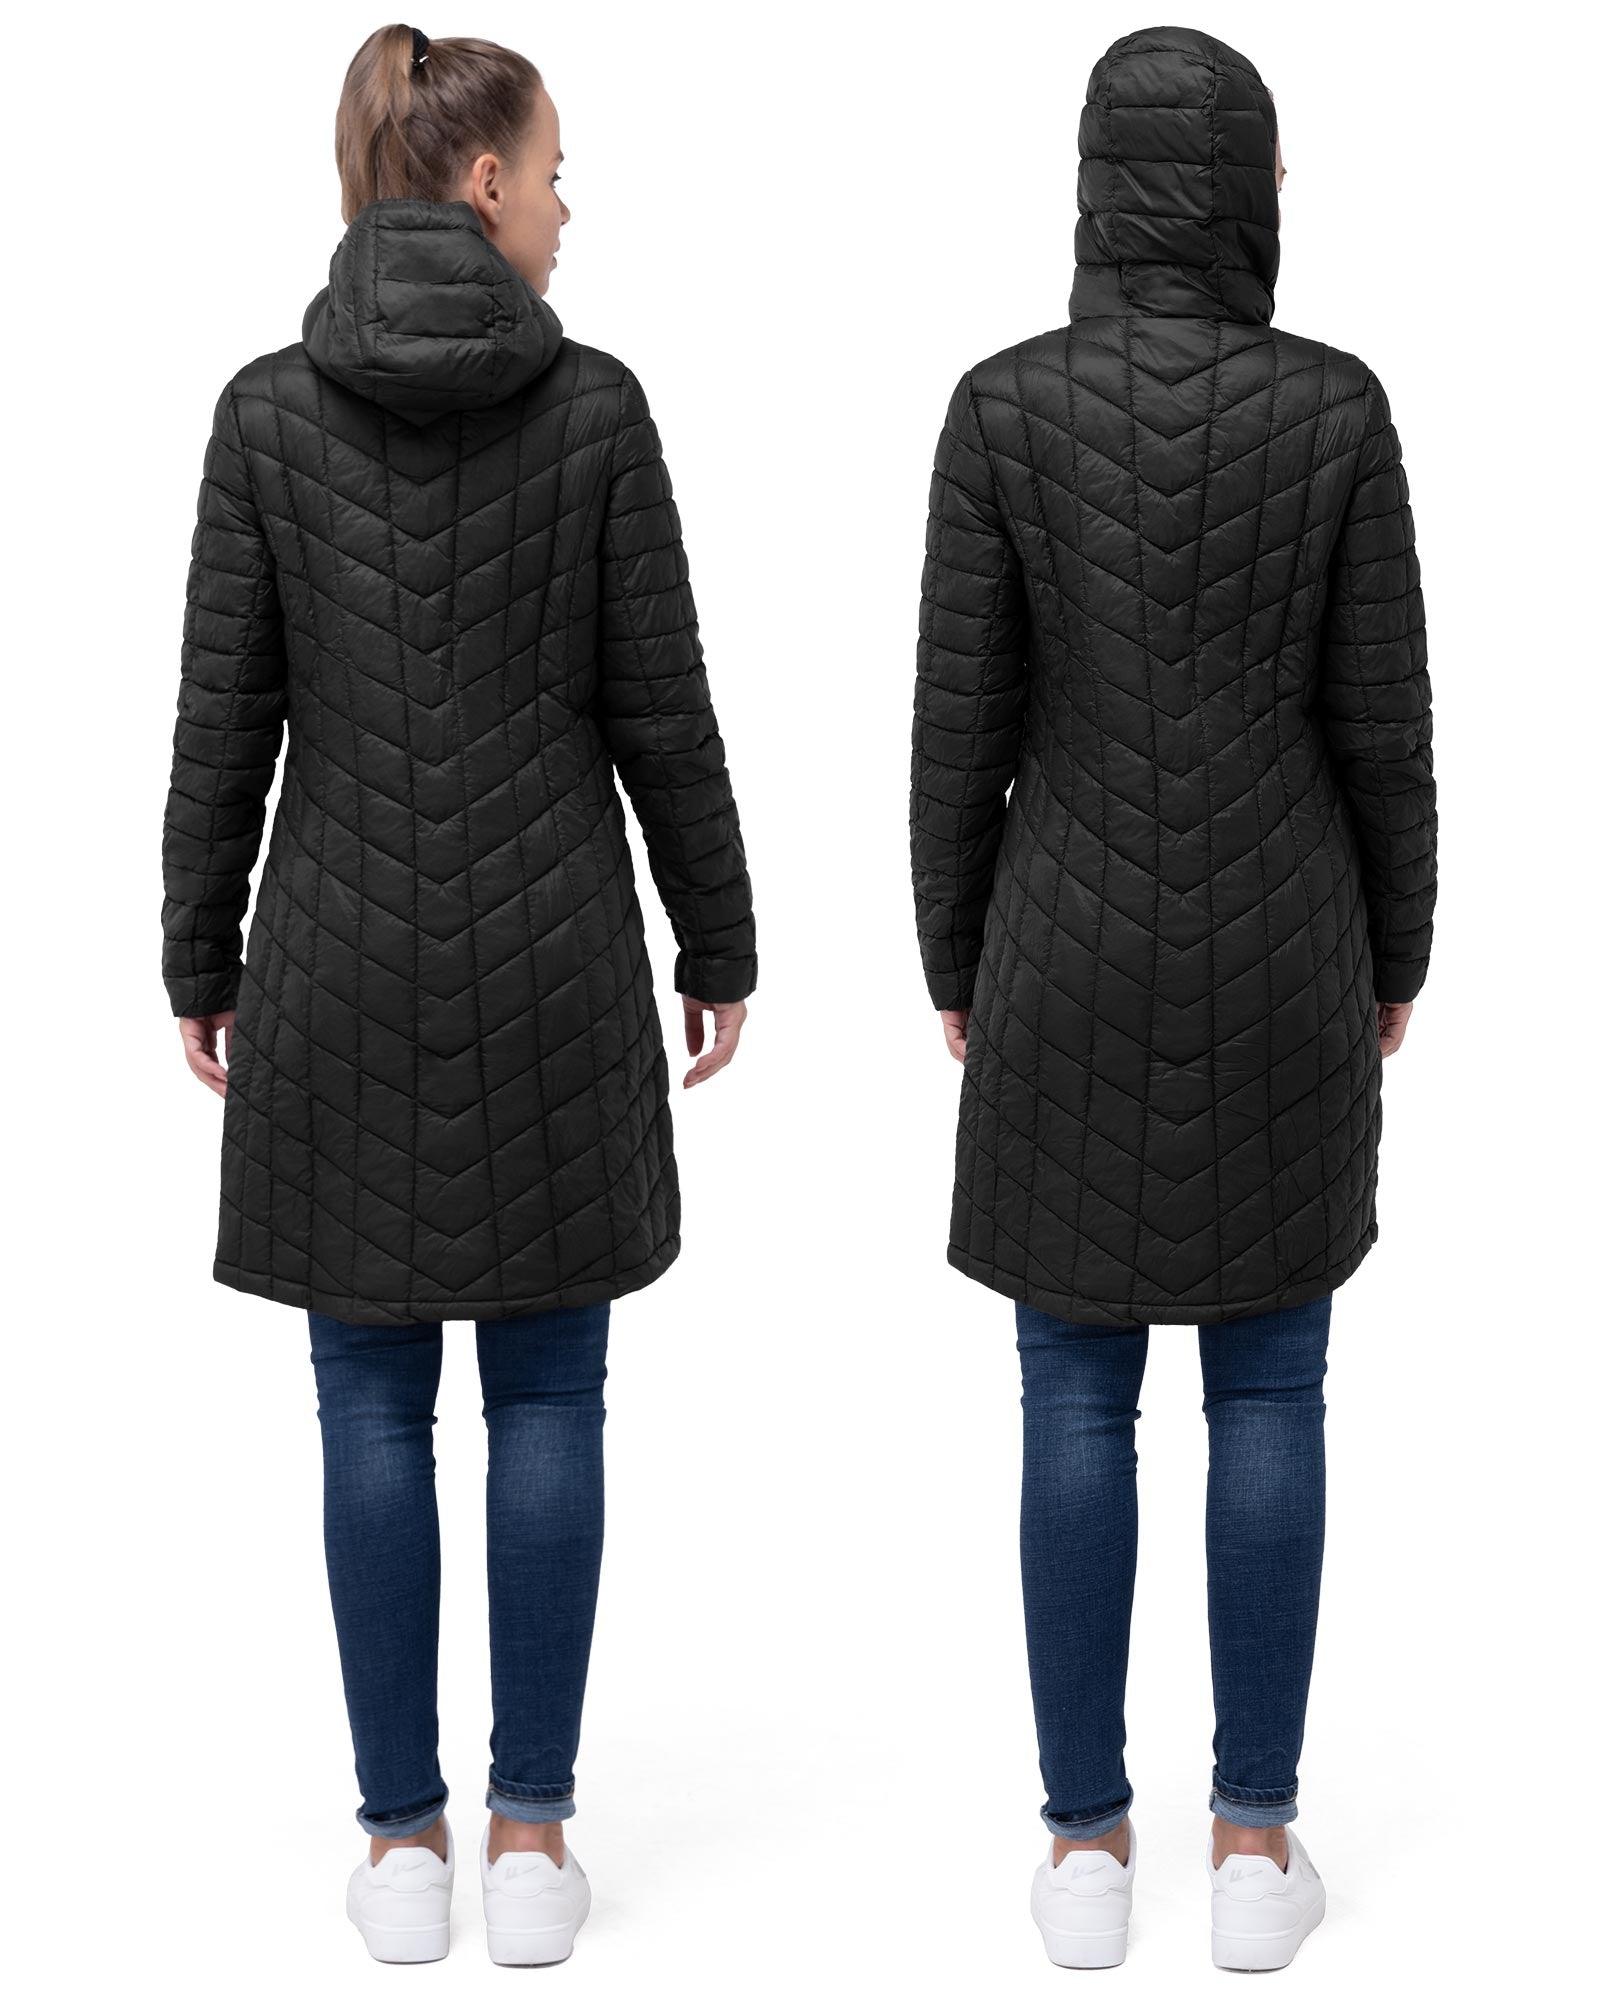 Women's Maxi Hooded Puffer Coat in Rainy Day Grey